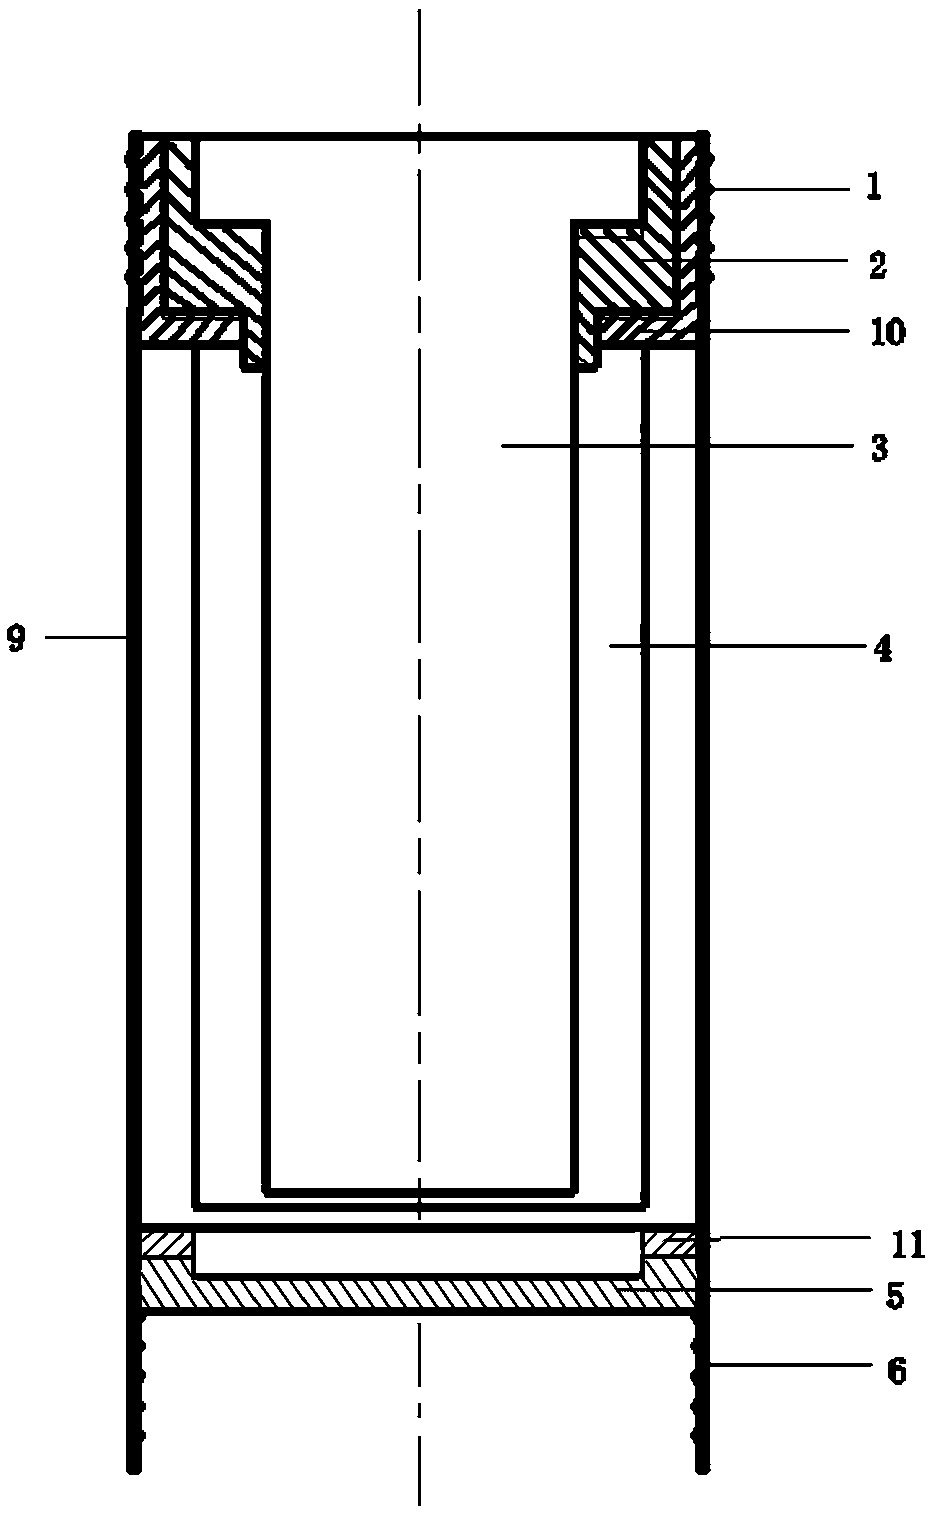 A Downhole Corrosion Monitoring Device